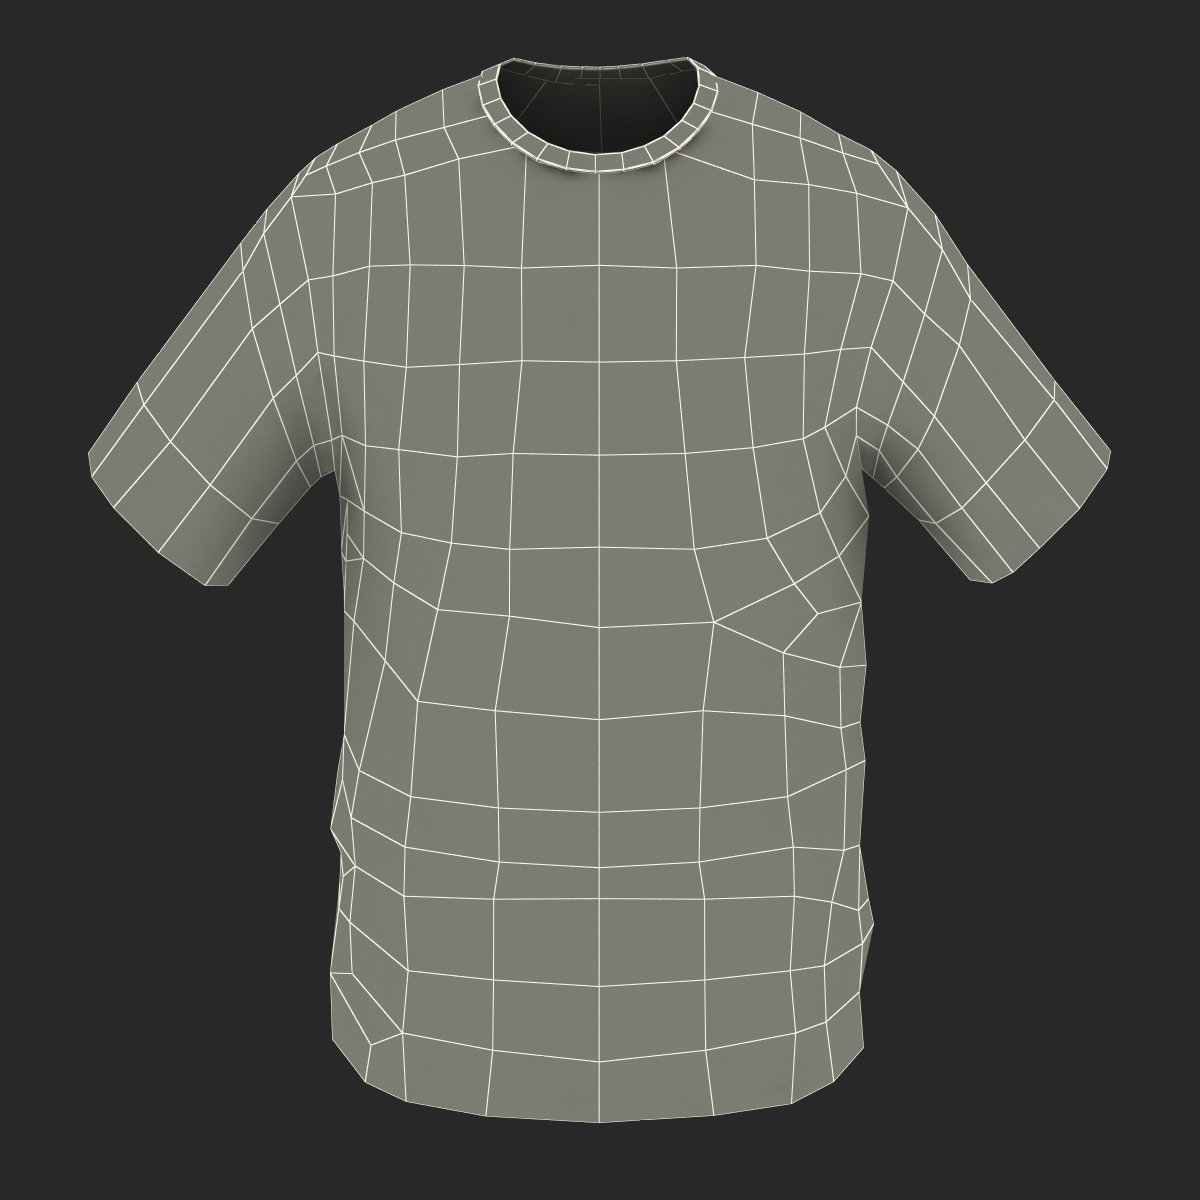 3D soccer t-shirts 2 t shirt model - TurboSquid 1332826